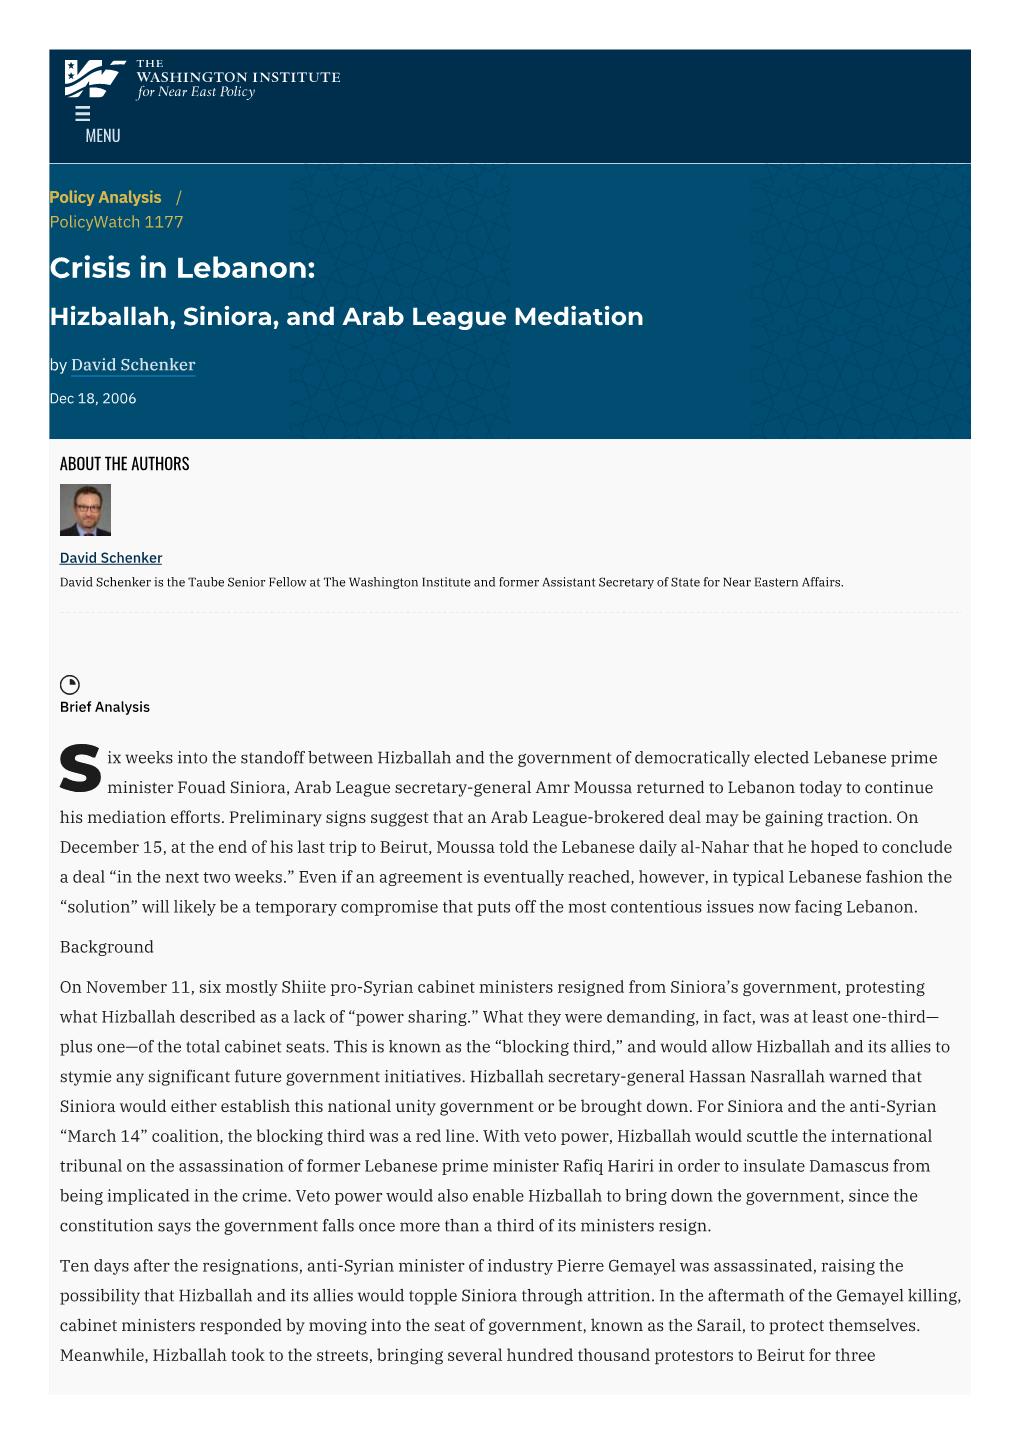 Hizballah, Siniora, and Arab League Mediation by David Schenker